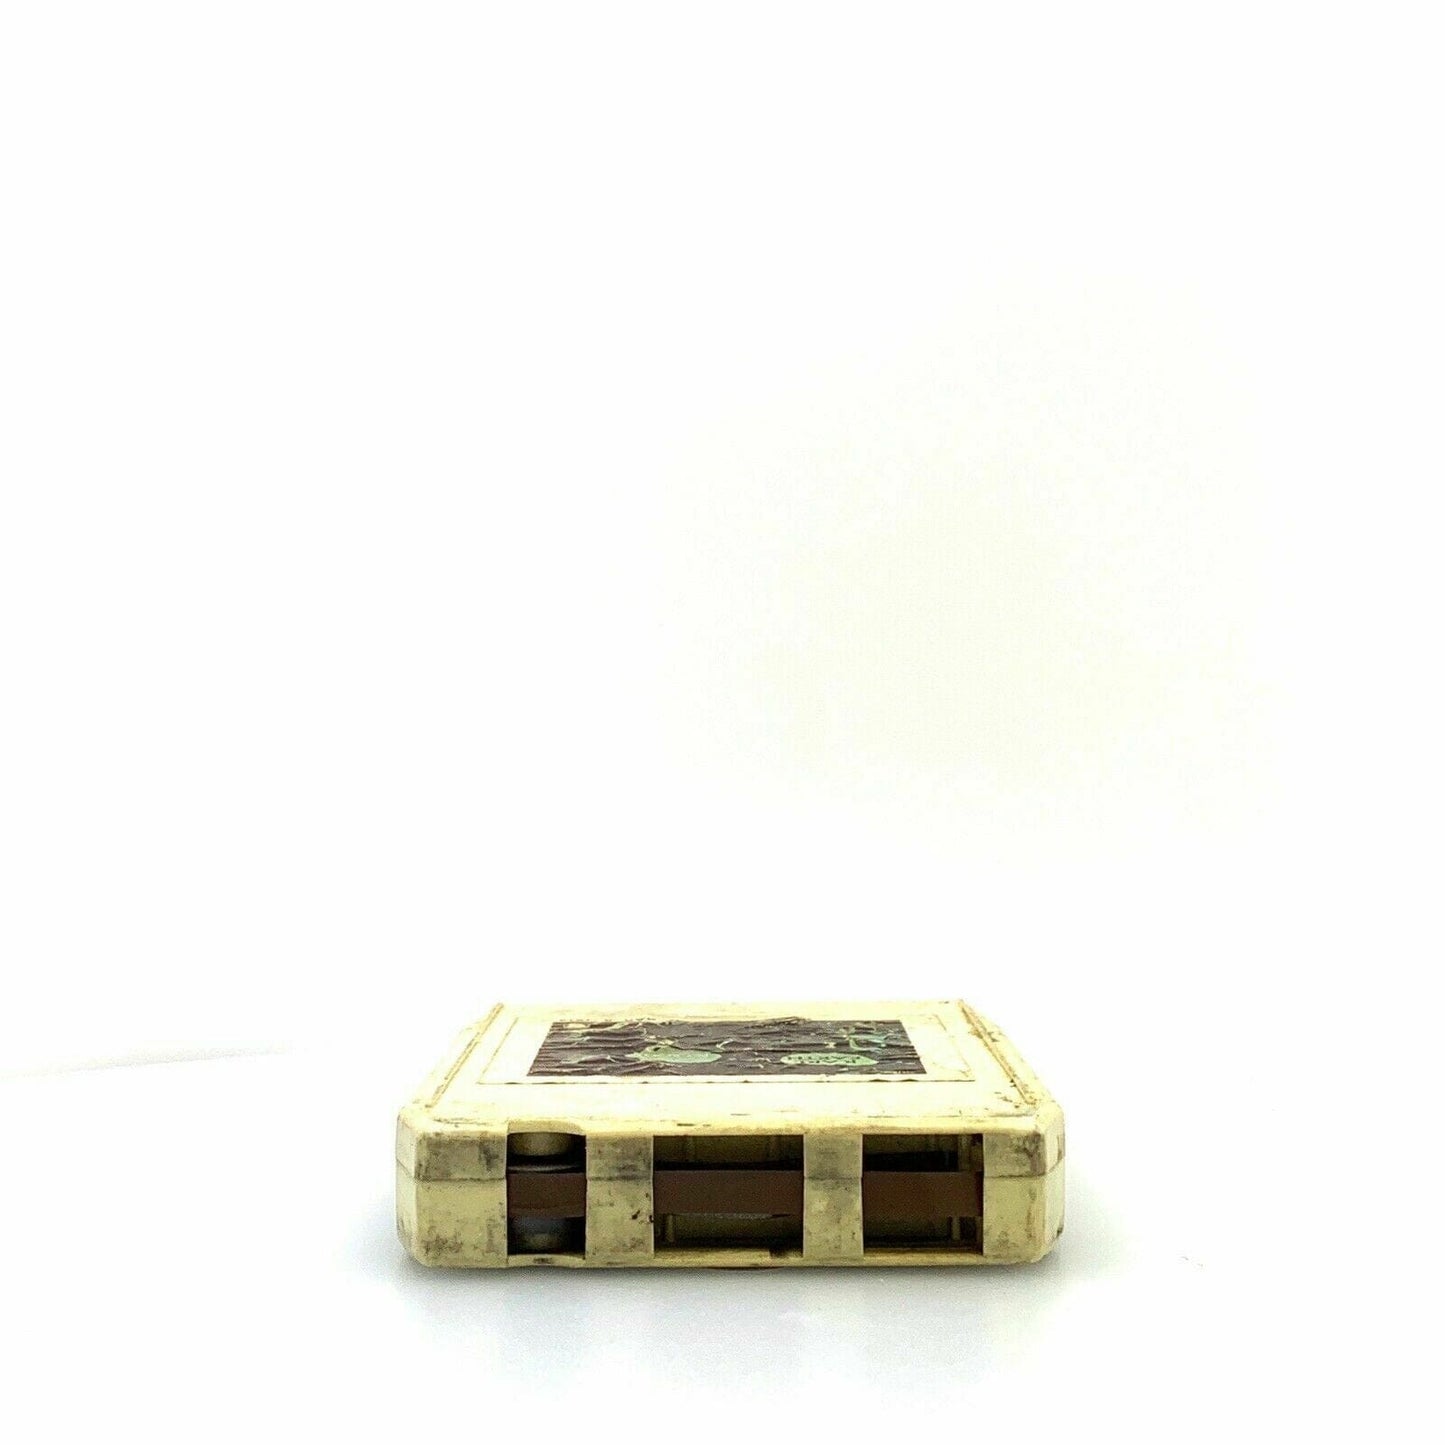 Vintage 8 Track Cartridge - Rare Earth “Ecology”